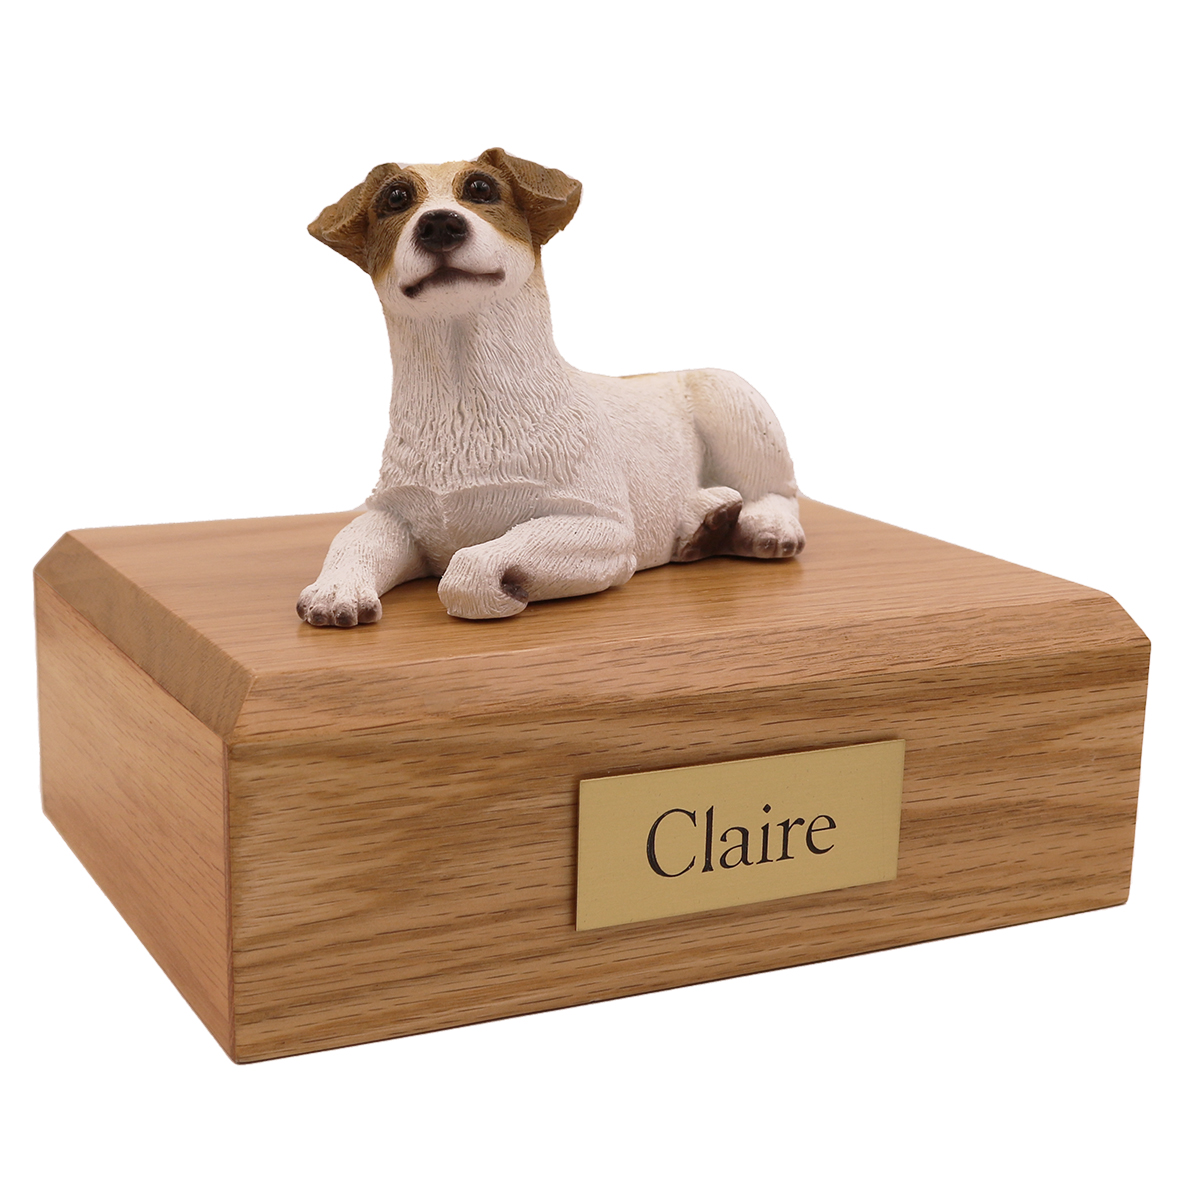 Dog, Jack Russell Terrier, Brown/White - Figurine Urn